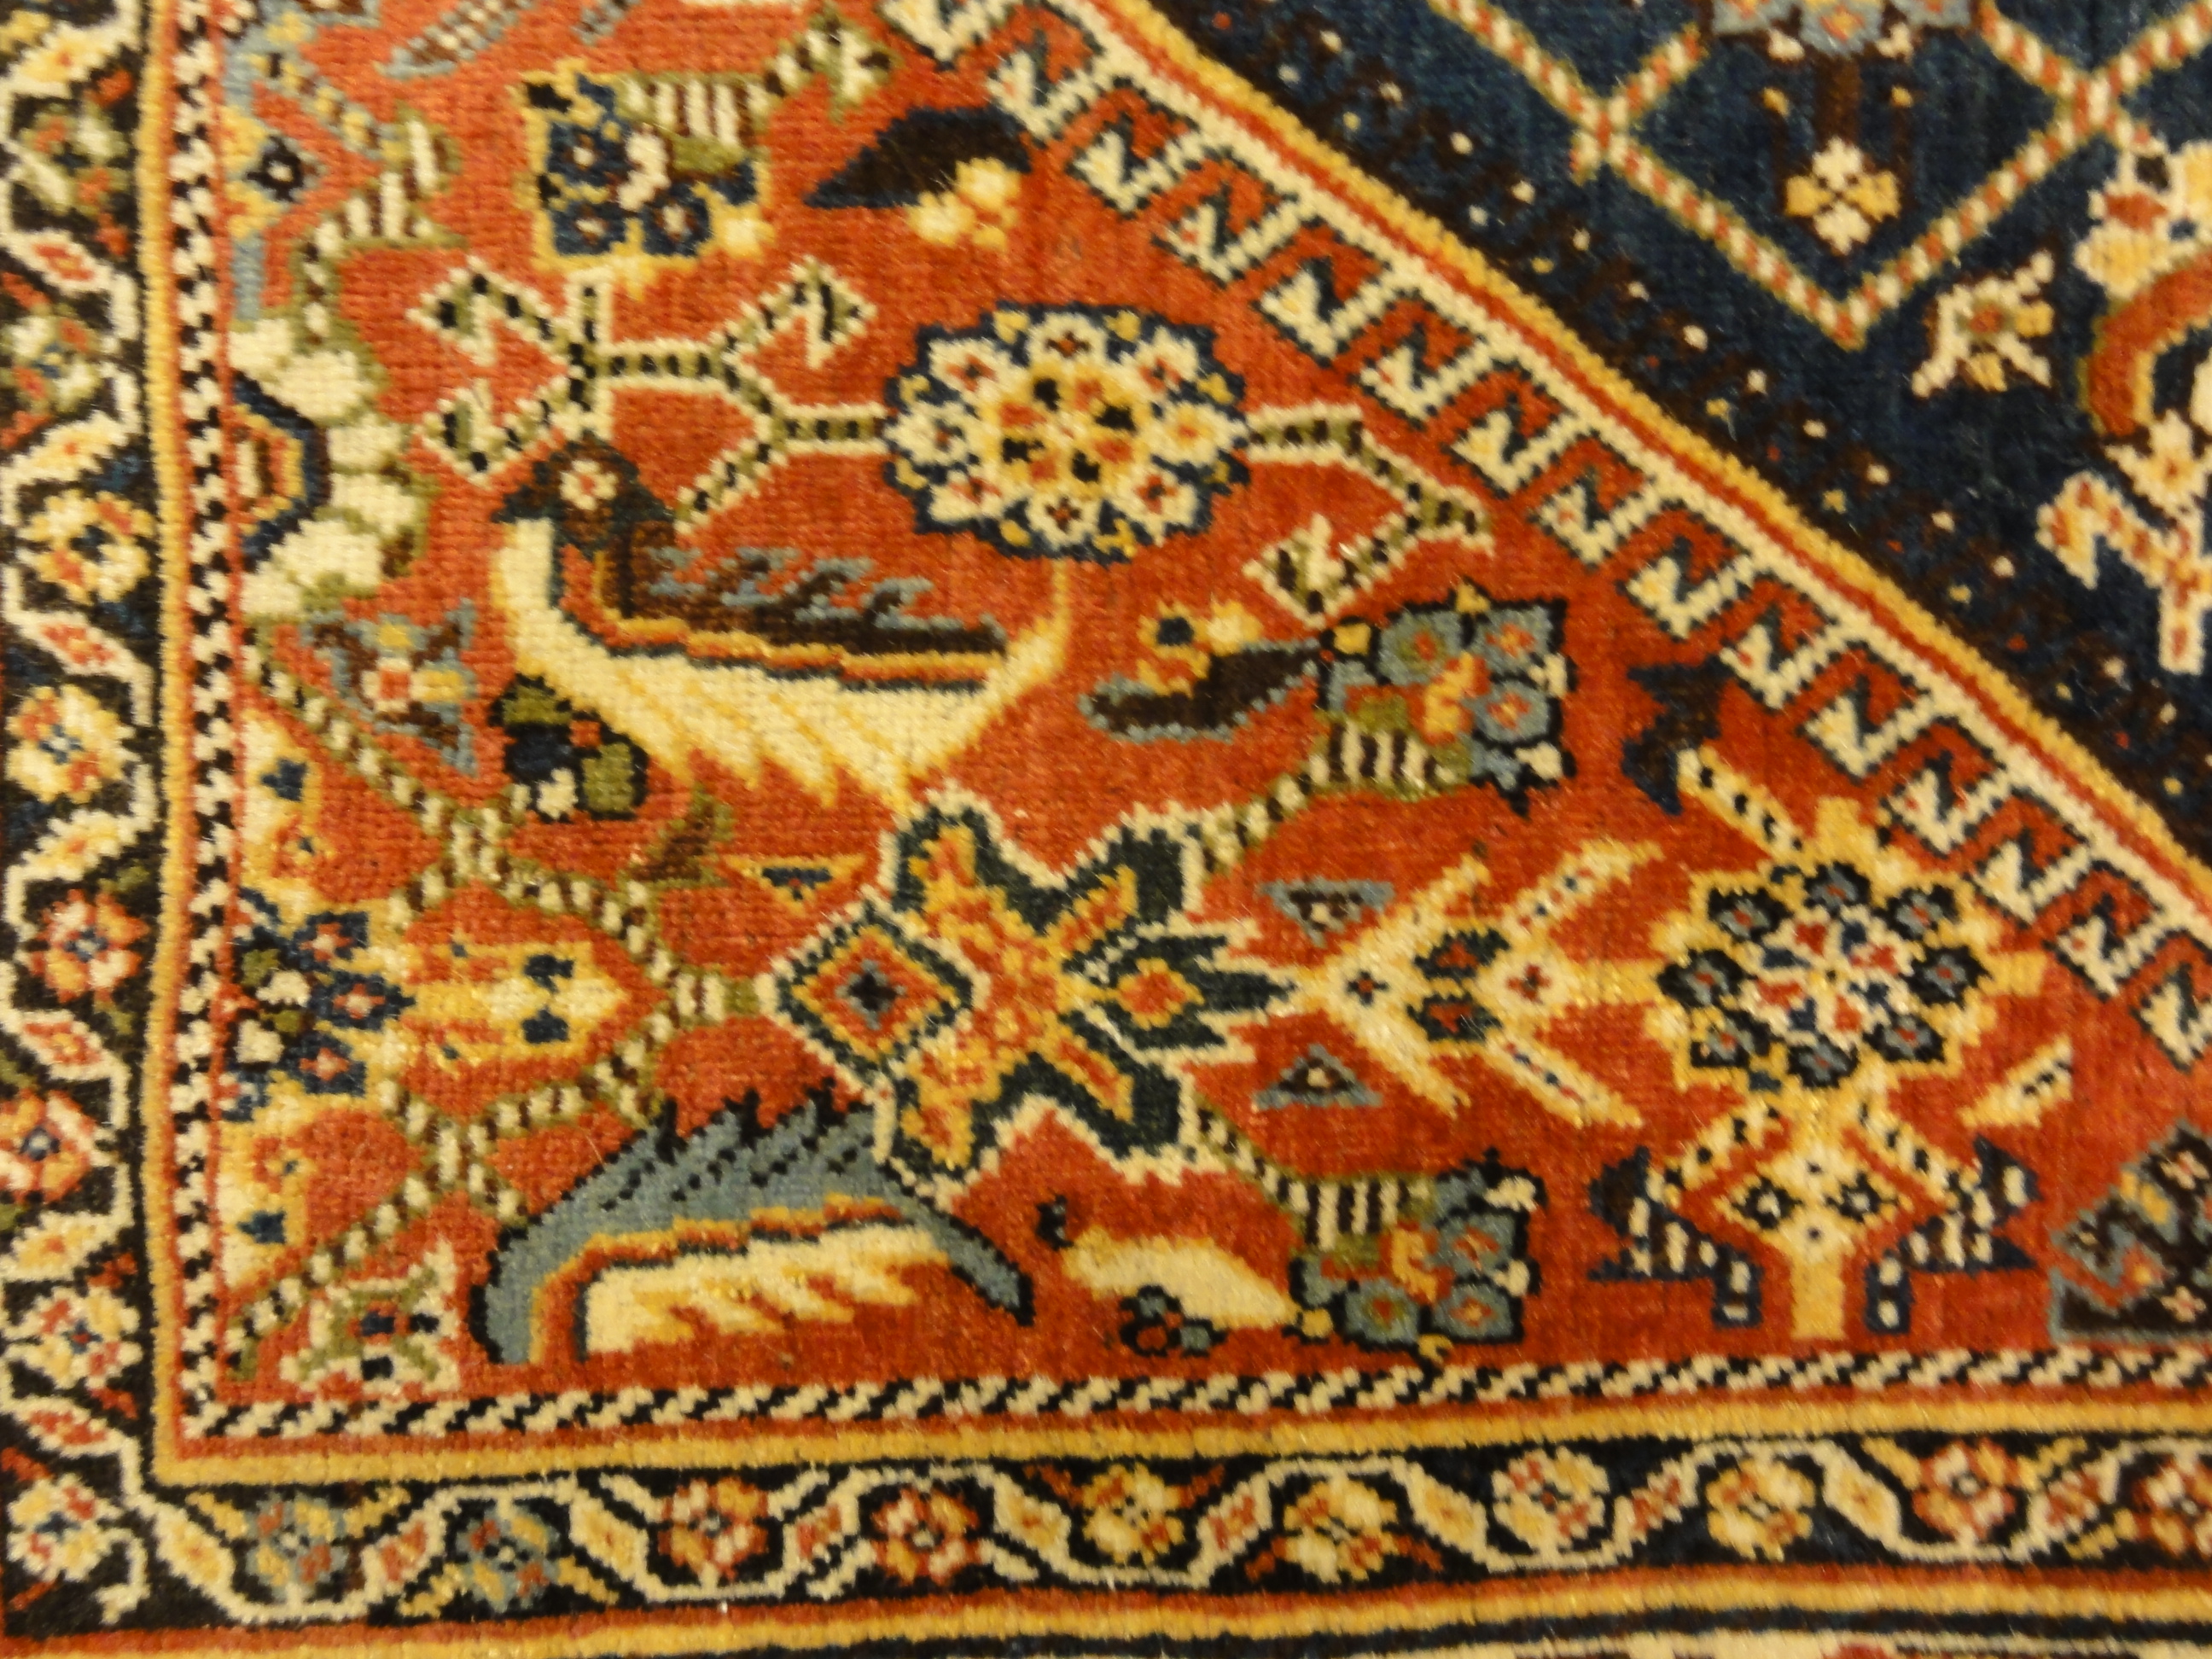 Antique Persian Qashqai Rug in Perfect Condition Genuine Authentic Woven Carpet Art Santa Barbara Design Center Rugs and More